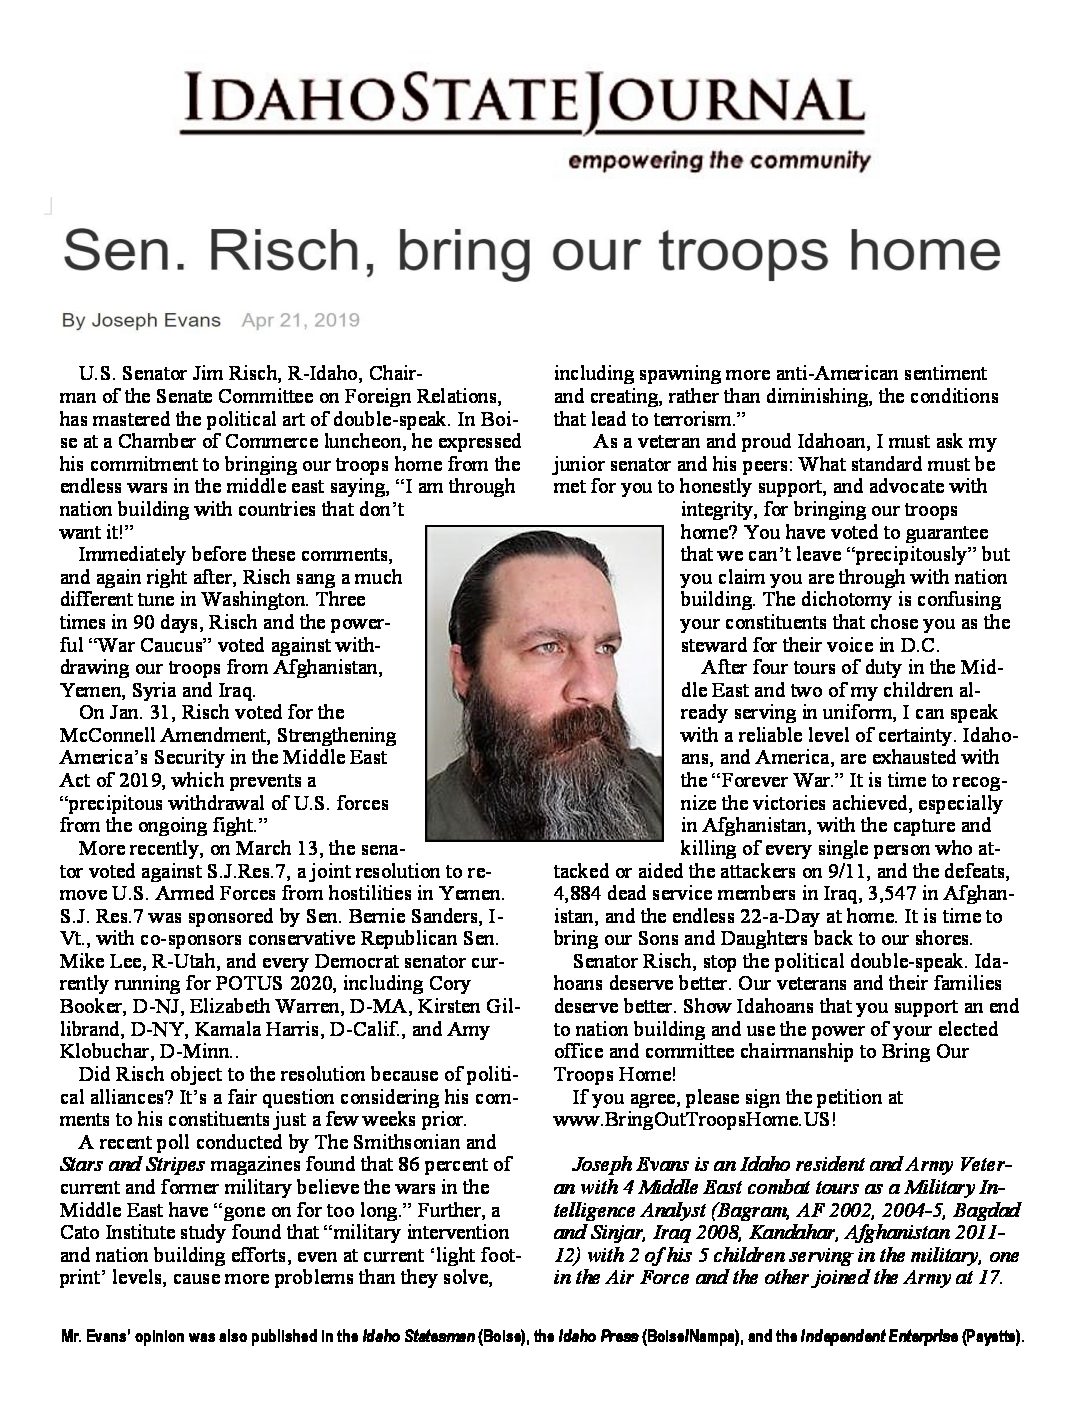 Idaho State Journal – Sen. Risch, bring our troops home